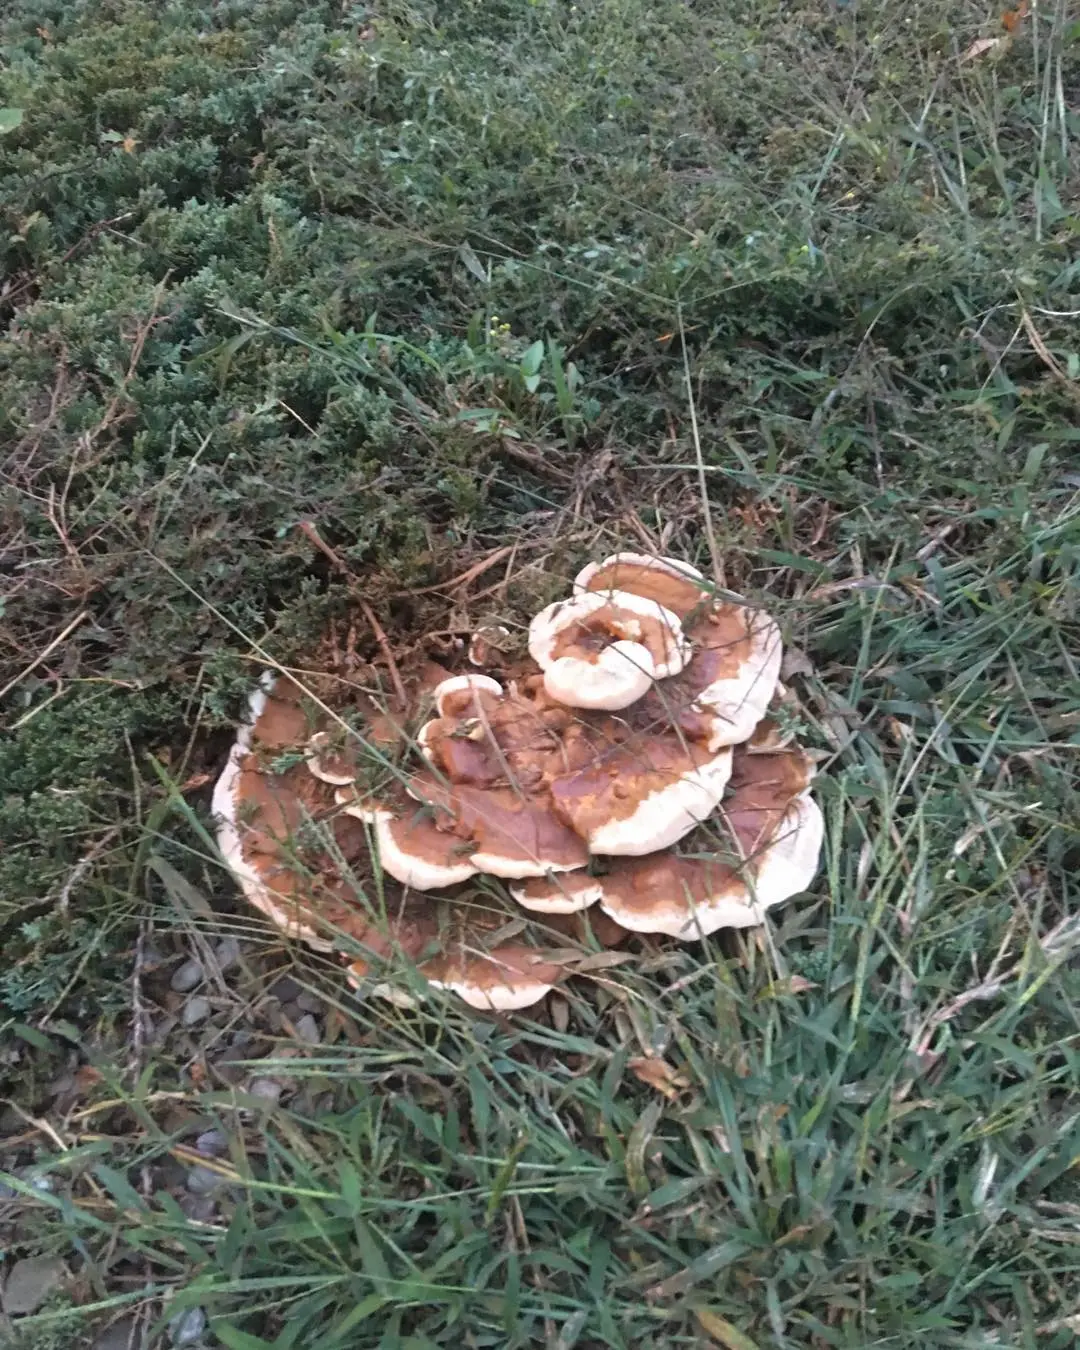 some fungi look like griddlecakes doe